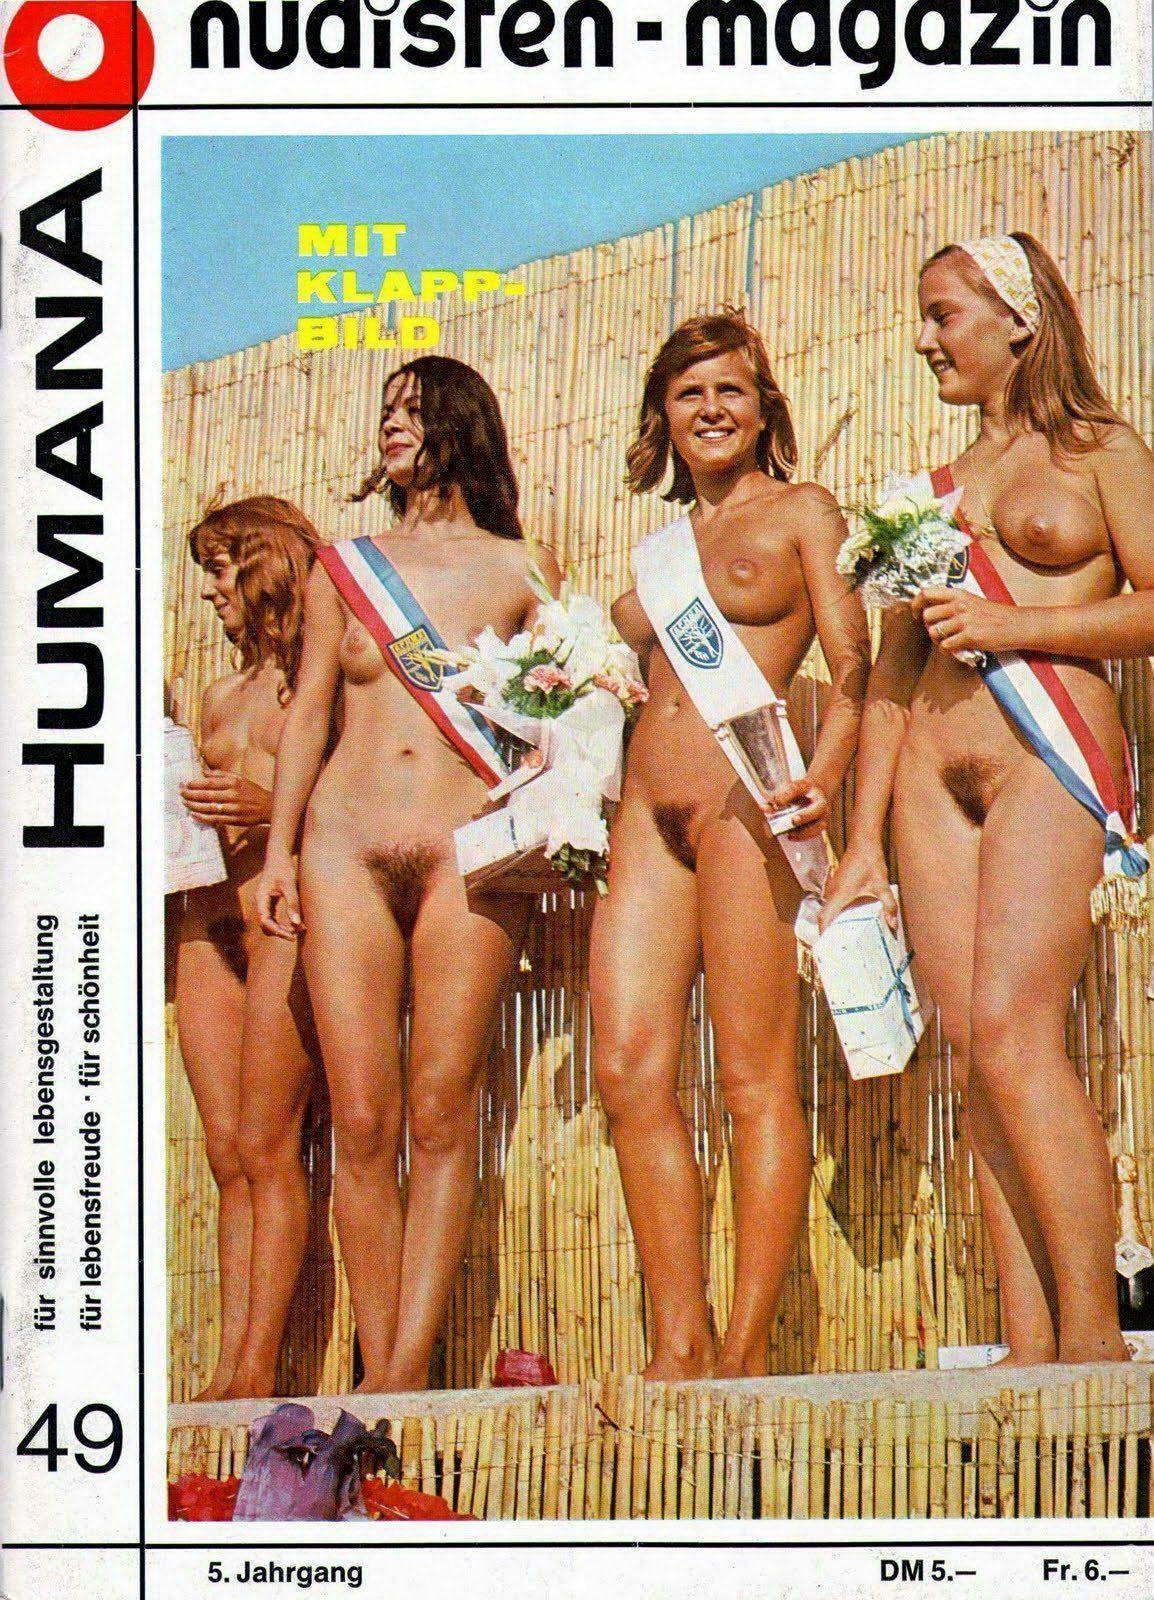 Miss teen nudist contest 